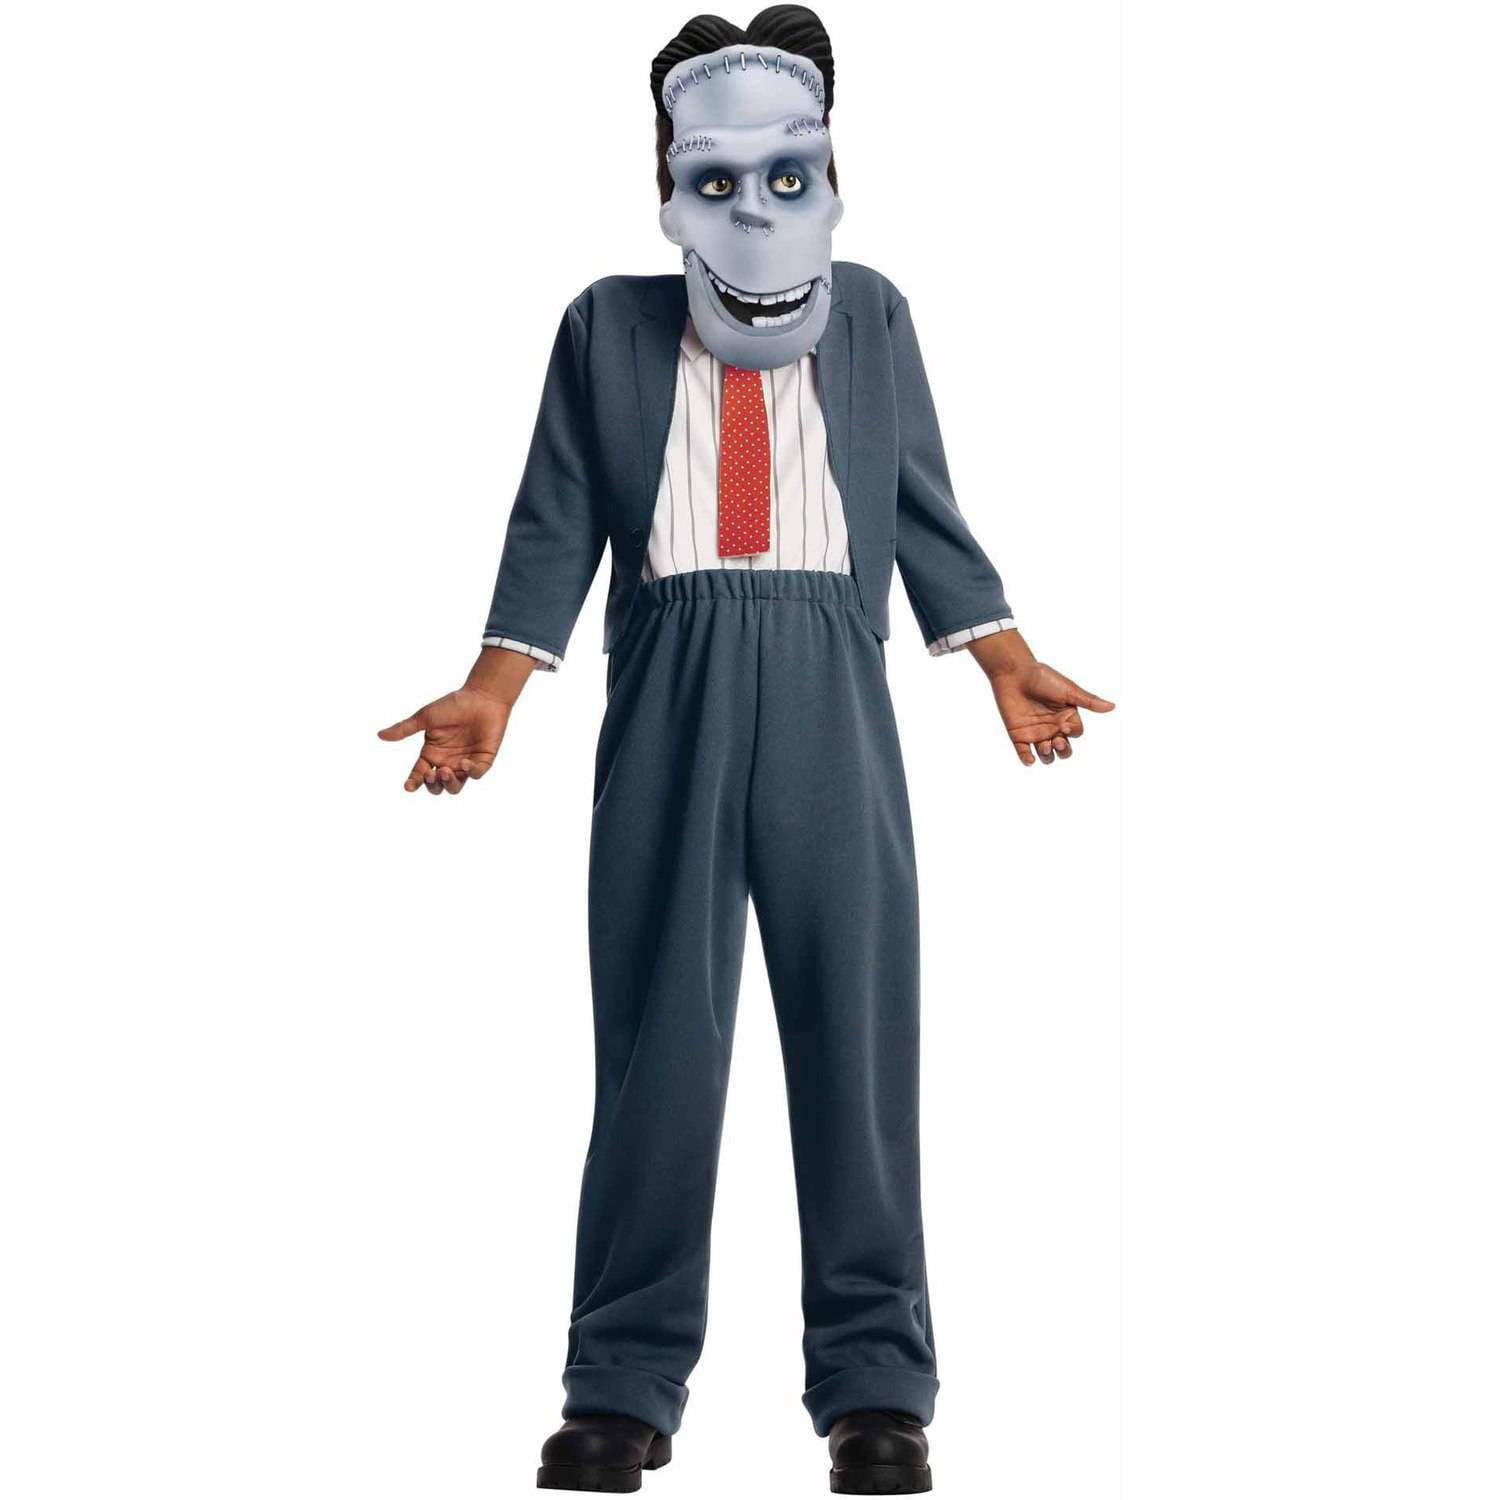 Buy Hotel Transylvania Frankie Child Halloween Costume at Walmart.com.